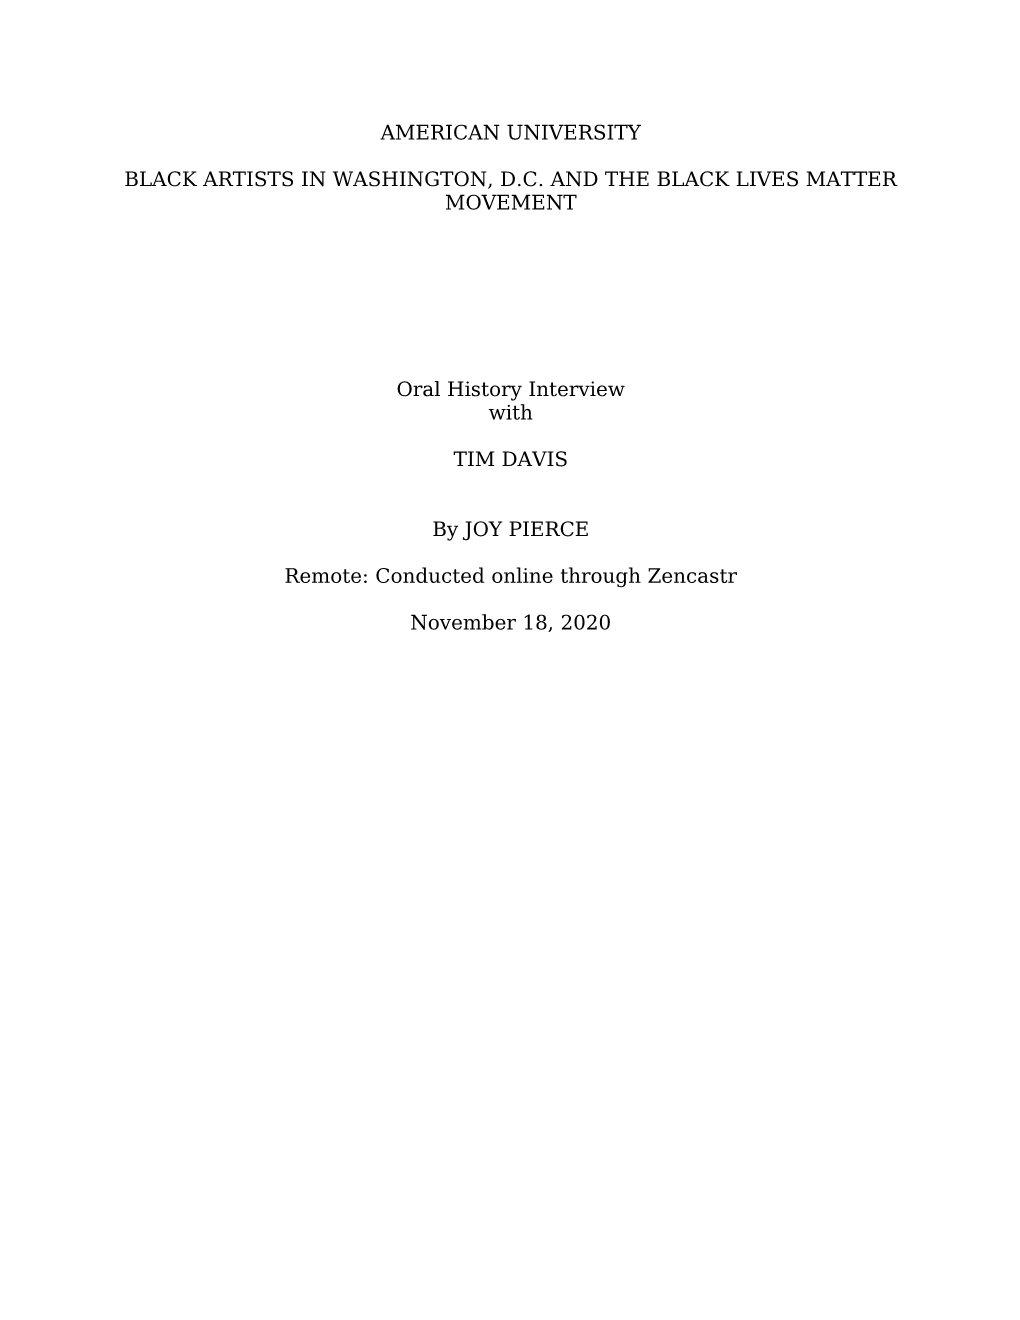 American University Black Artists in Washington, D.C